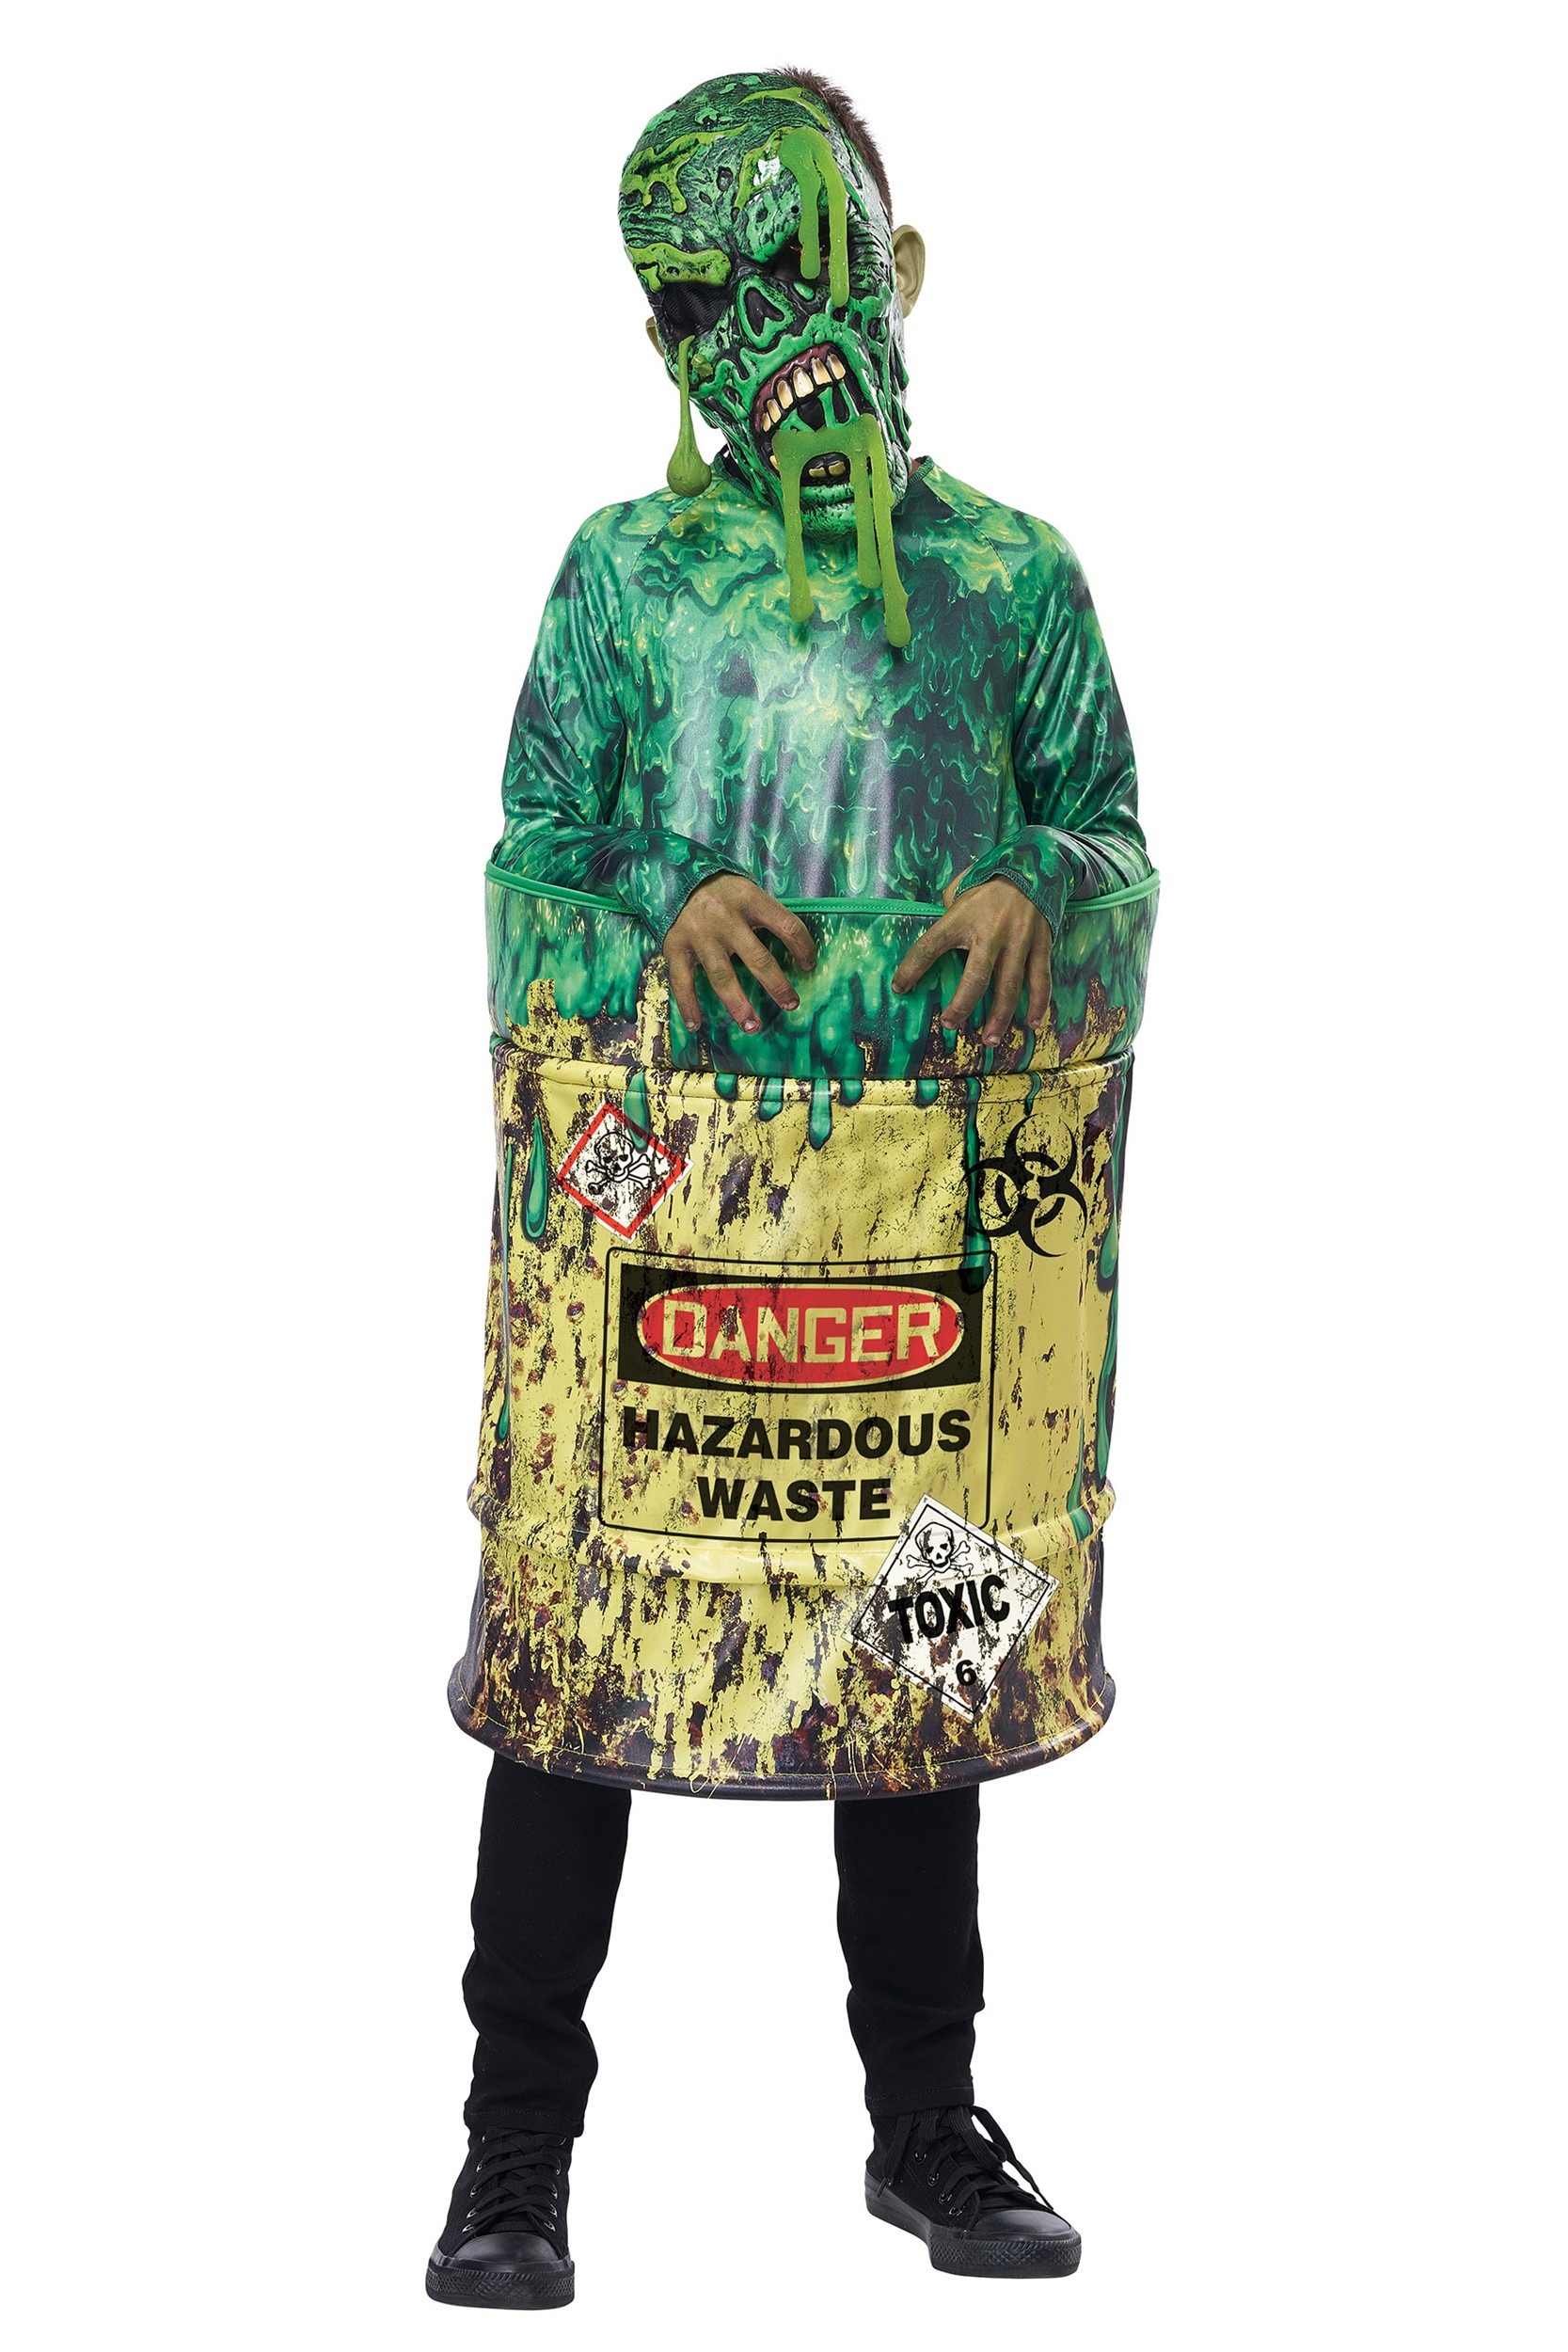 Hazardous Waste Costume for Kids